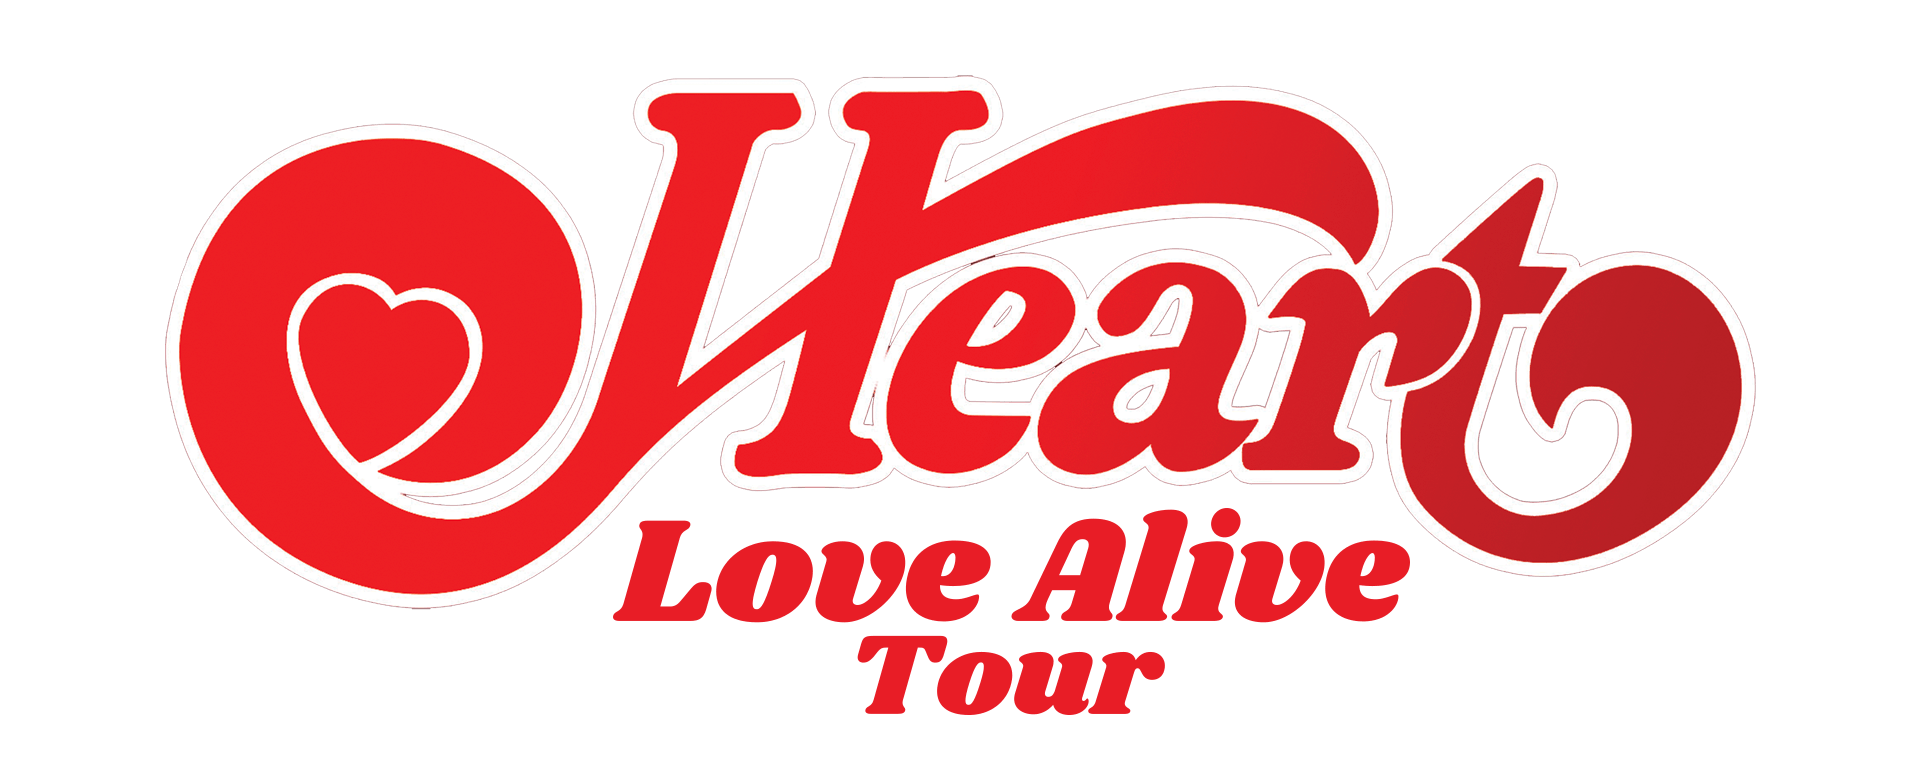 Heart Band Logo - Heart :: reveal